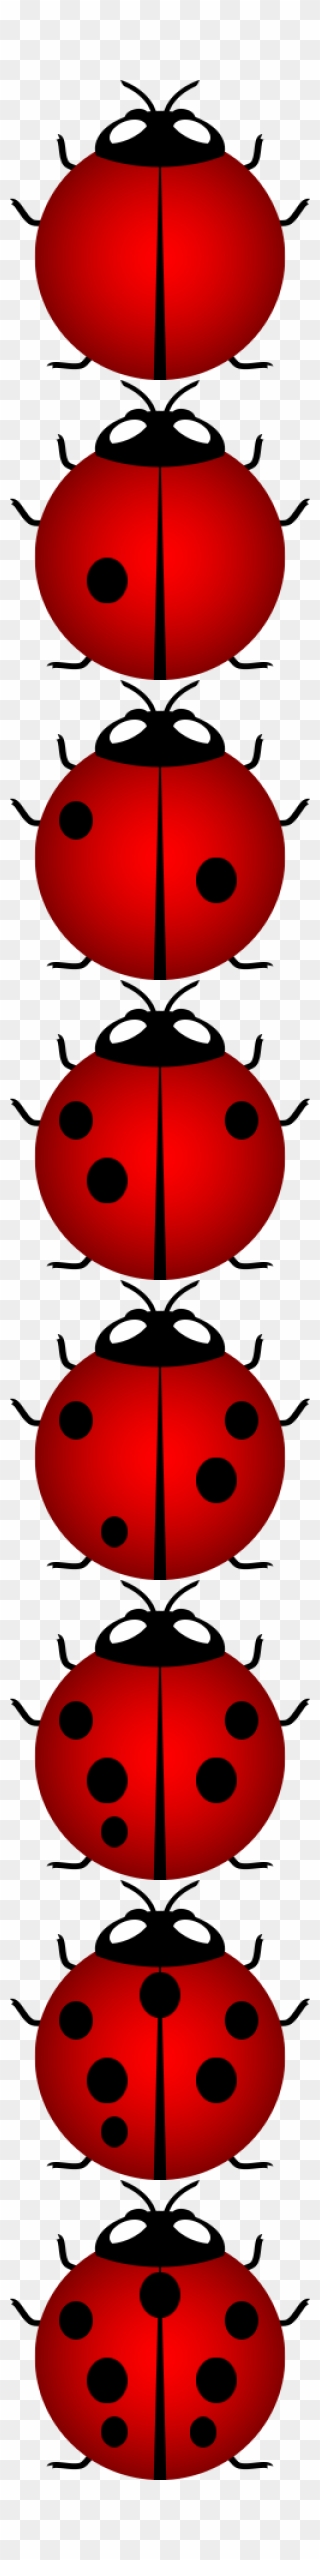 Ladybug Sprite Clipart